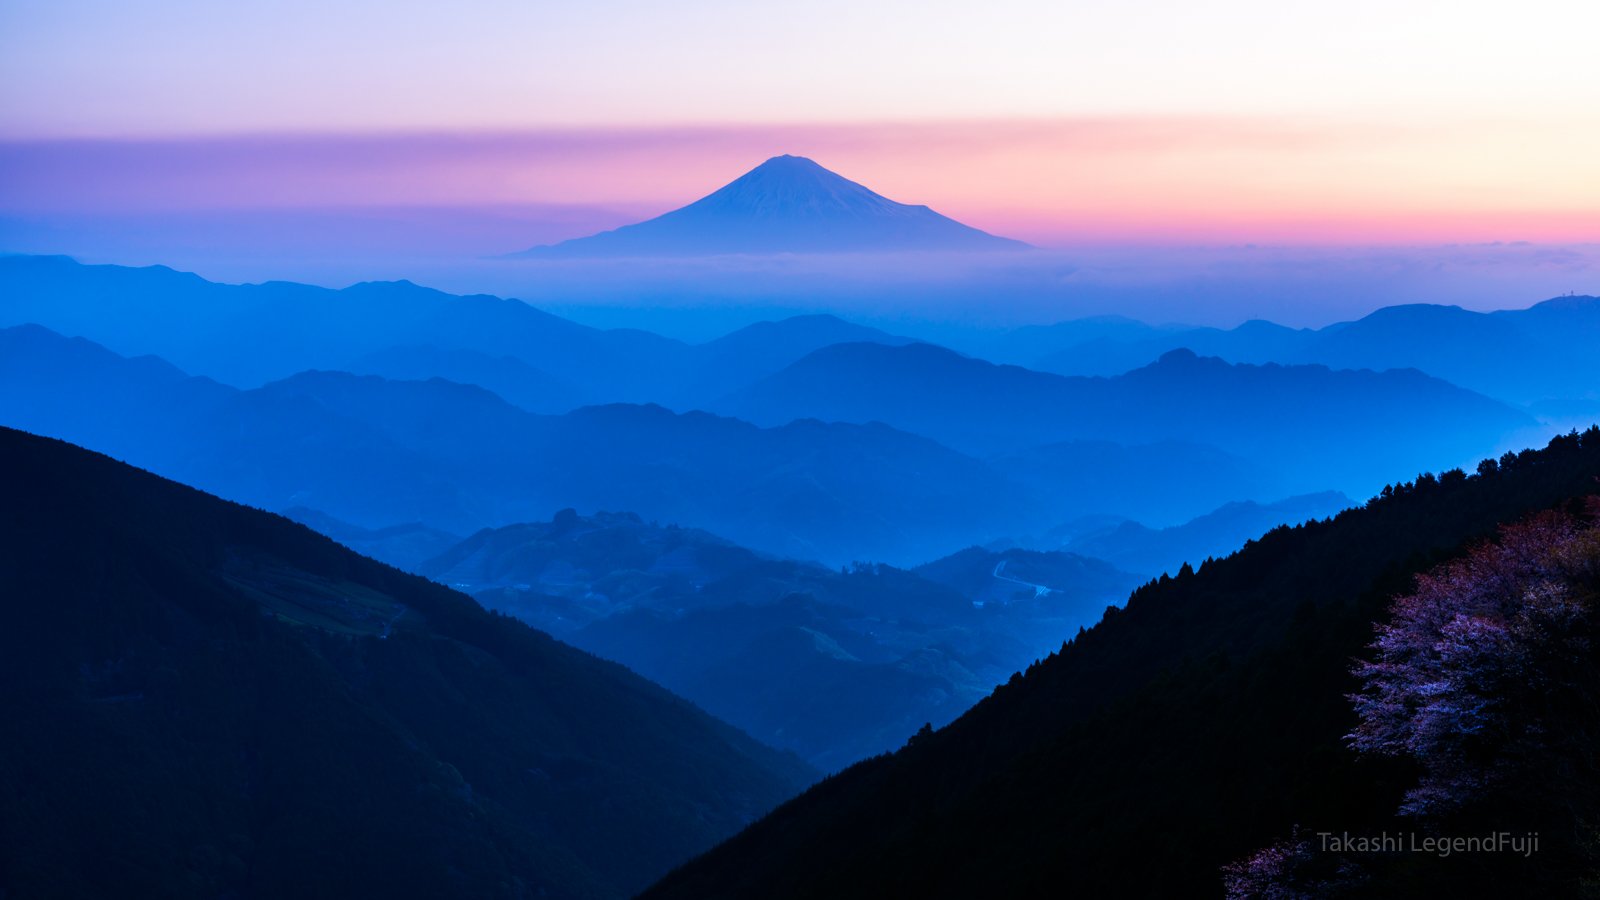 Fuji,mountain,Sakura,cherry,morning,dawn,blue,pink,beautiful,amazing,, Takashi